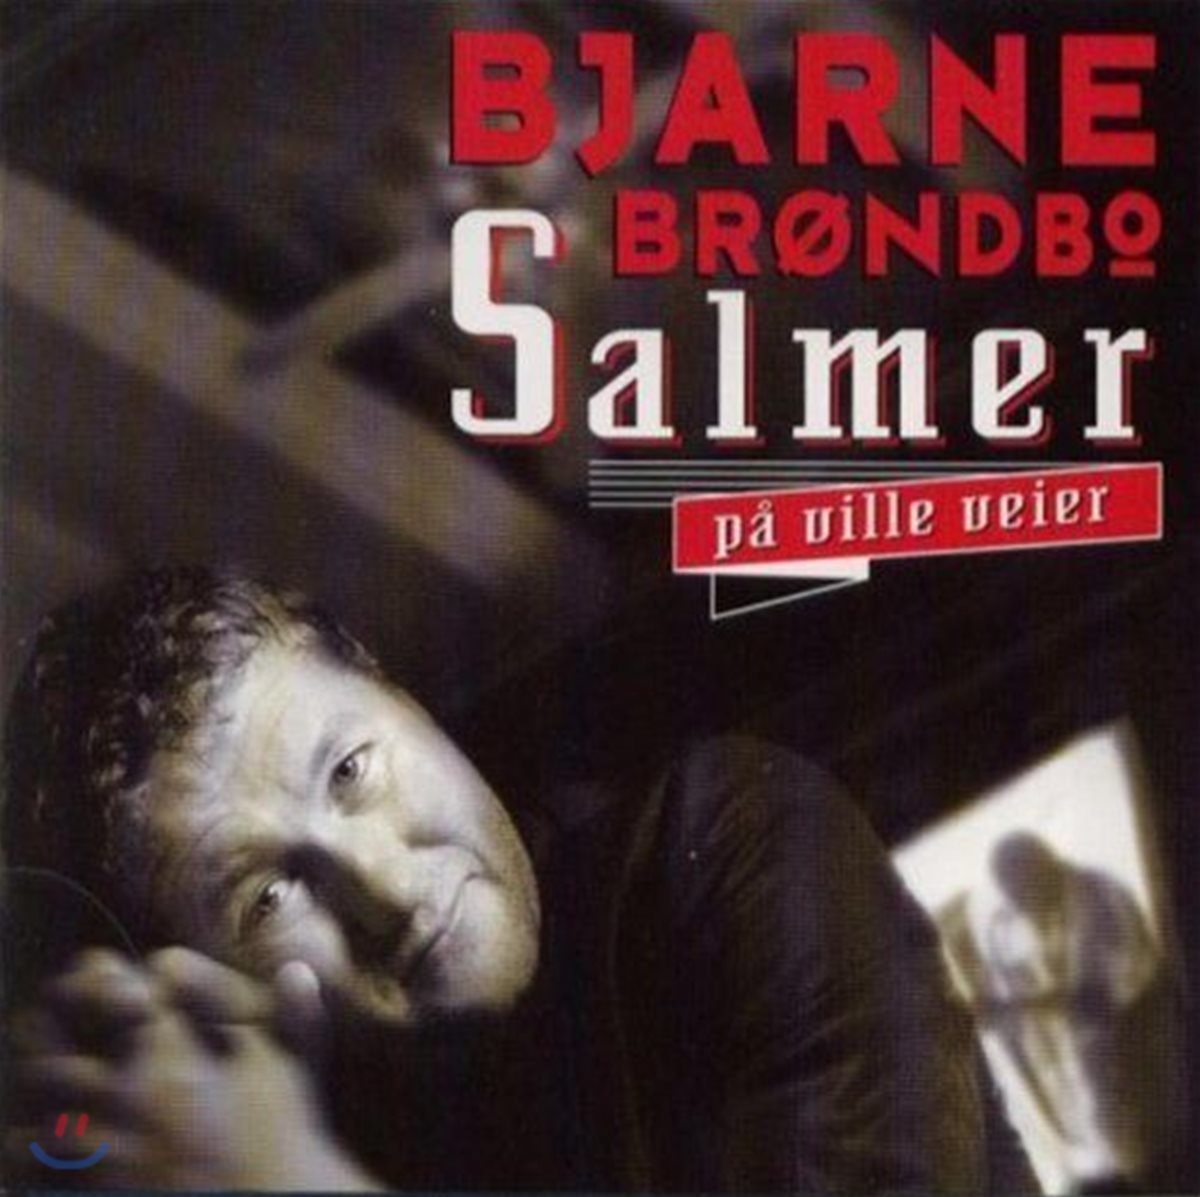 Bjarne Brondbo (비야르네 브론드보) - Salmer Pa Ville Veier